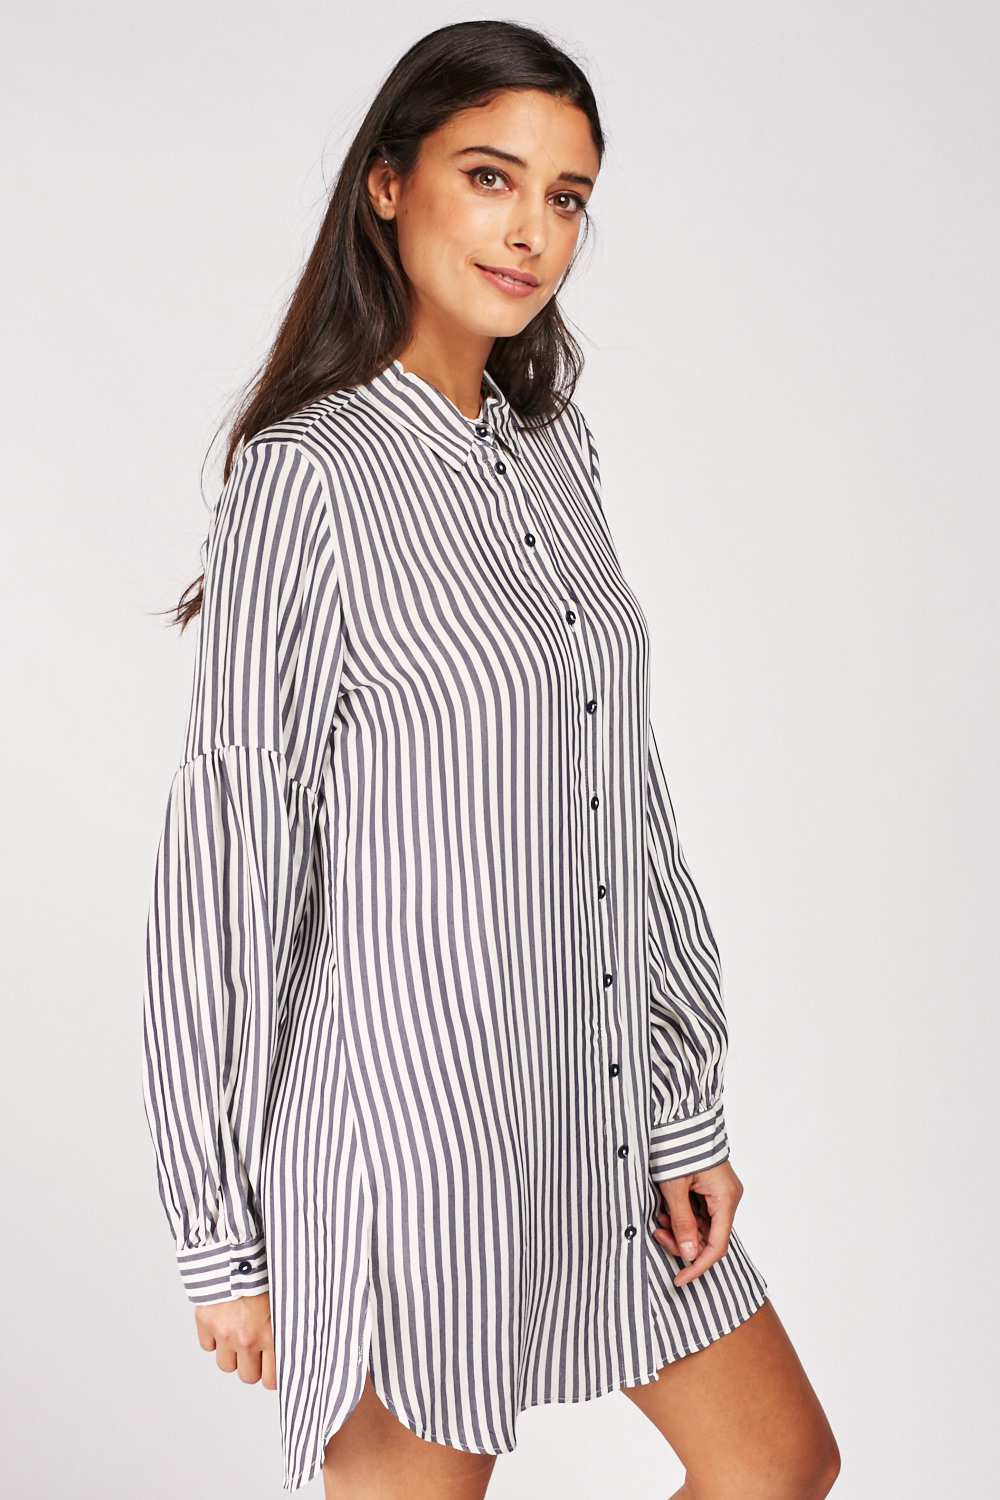 Gathered Sleeve Striped Shirt Dress - Just $7